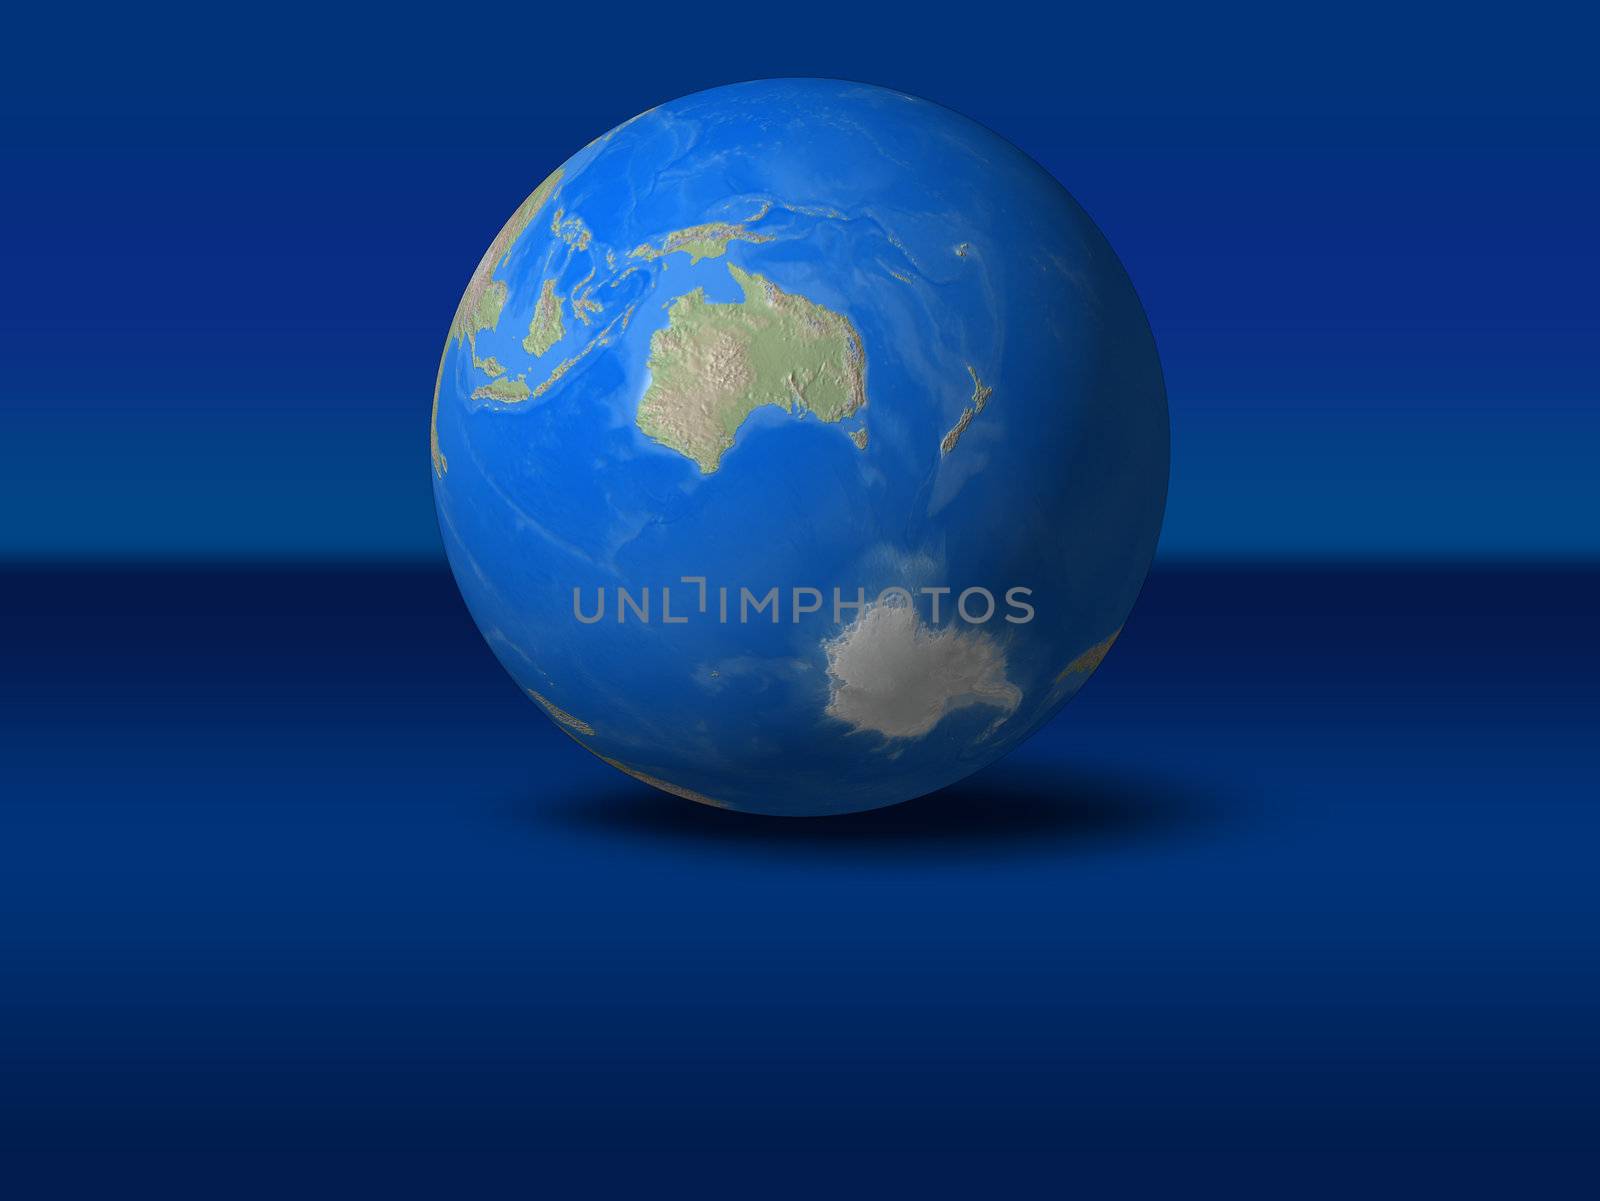 World Globe on blue graphic background
Australia view